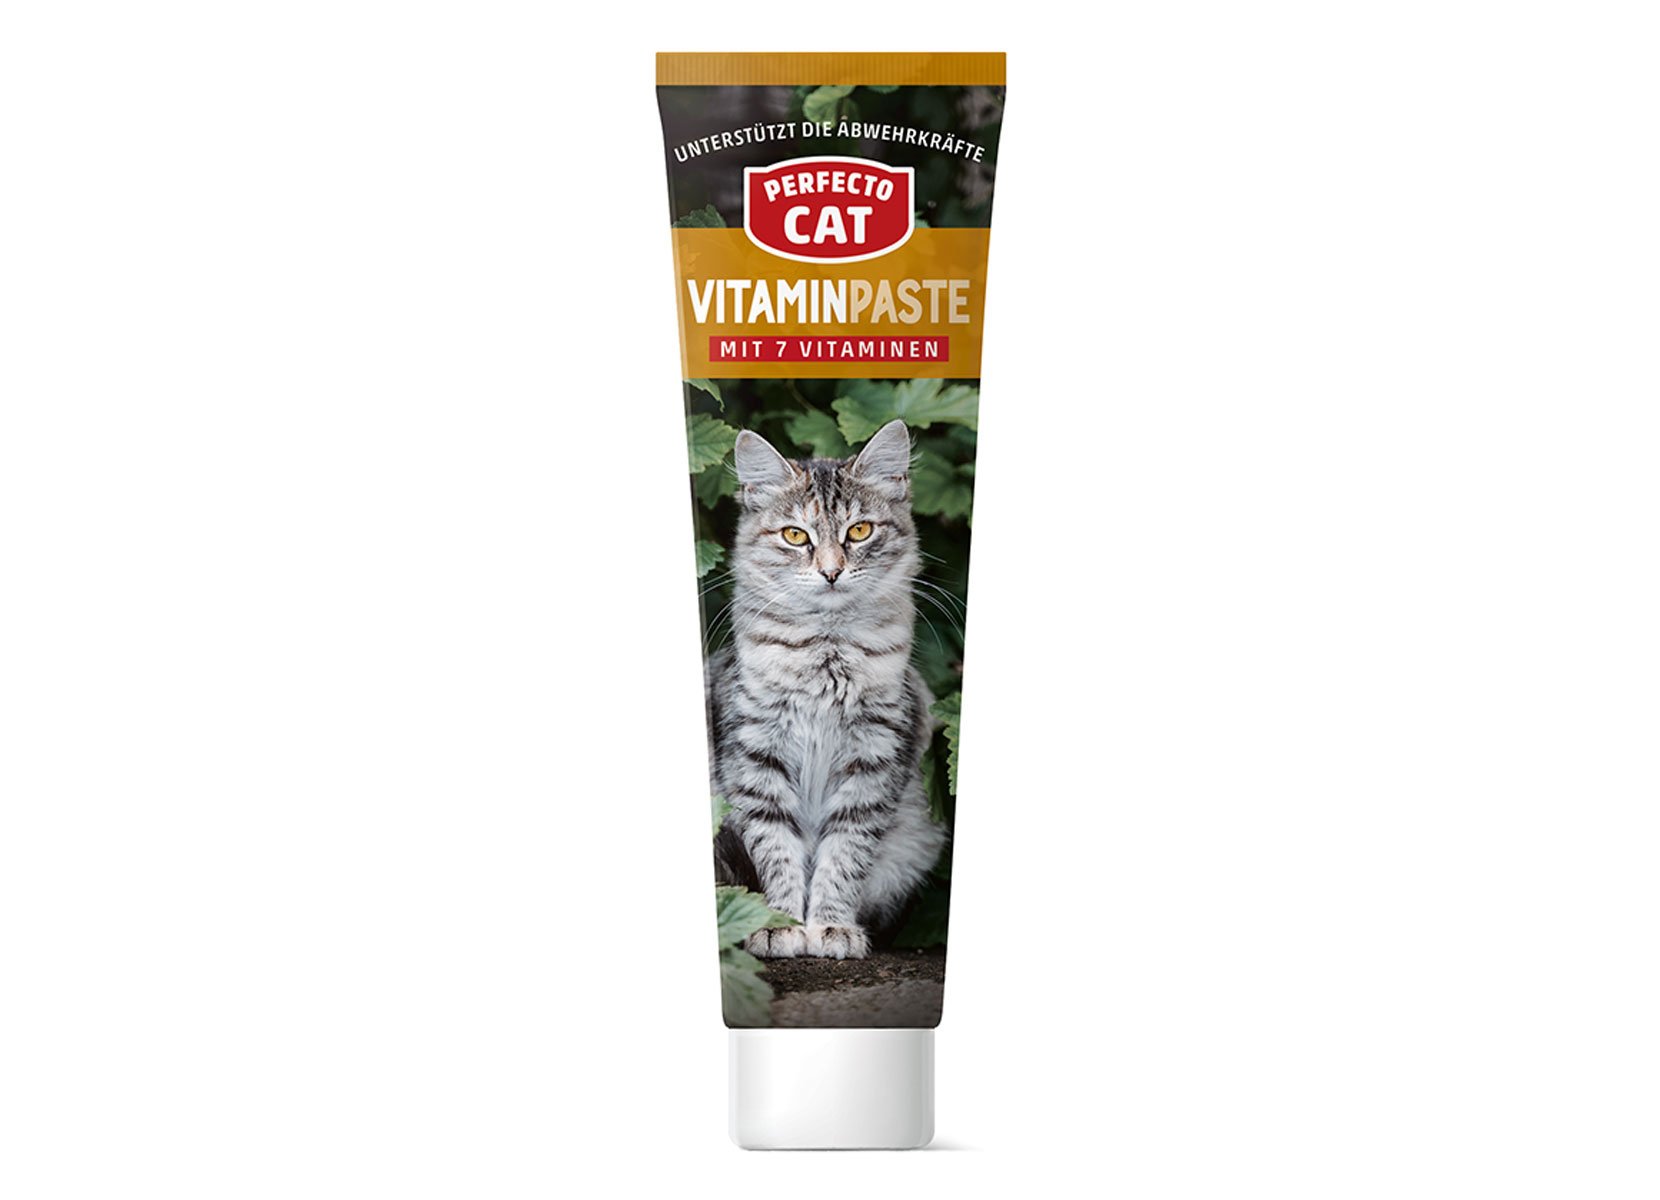 Perfecto Cat Vitaminpaste 100g Tube